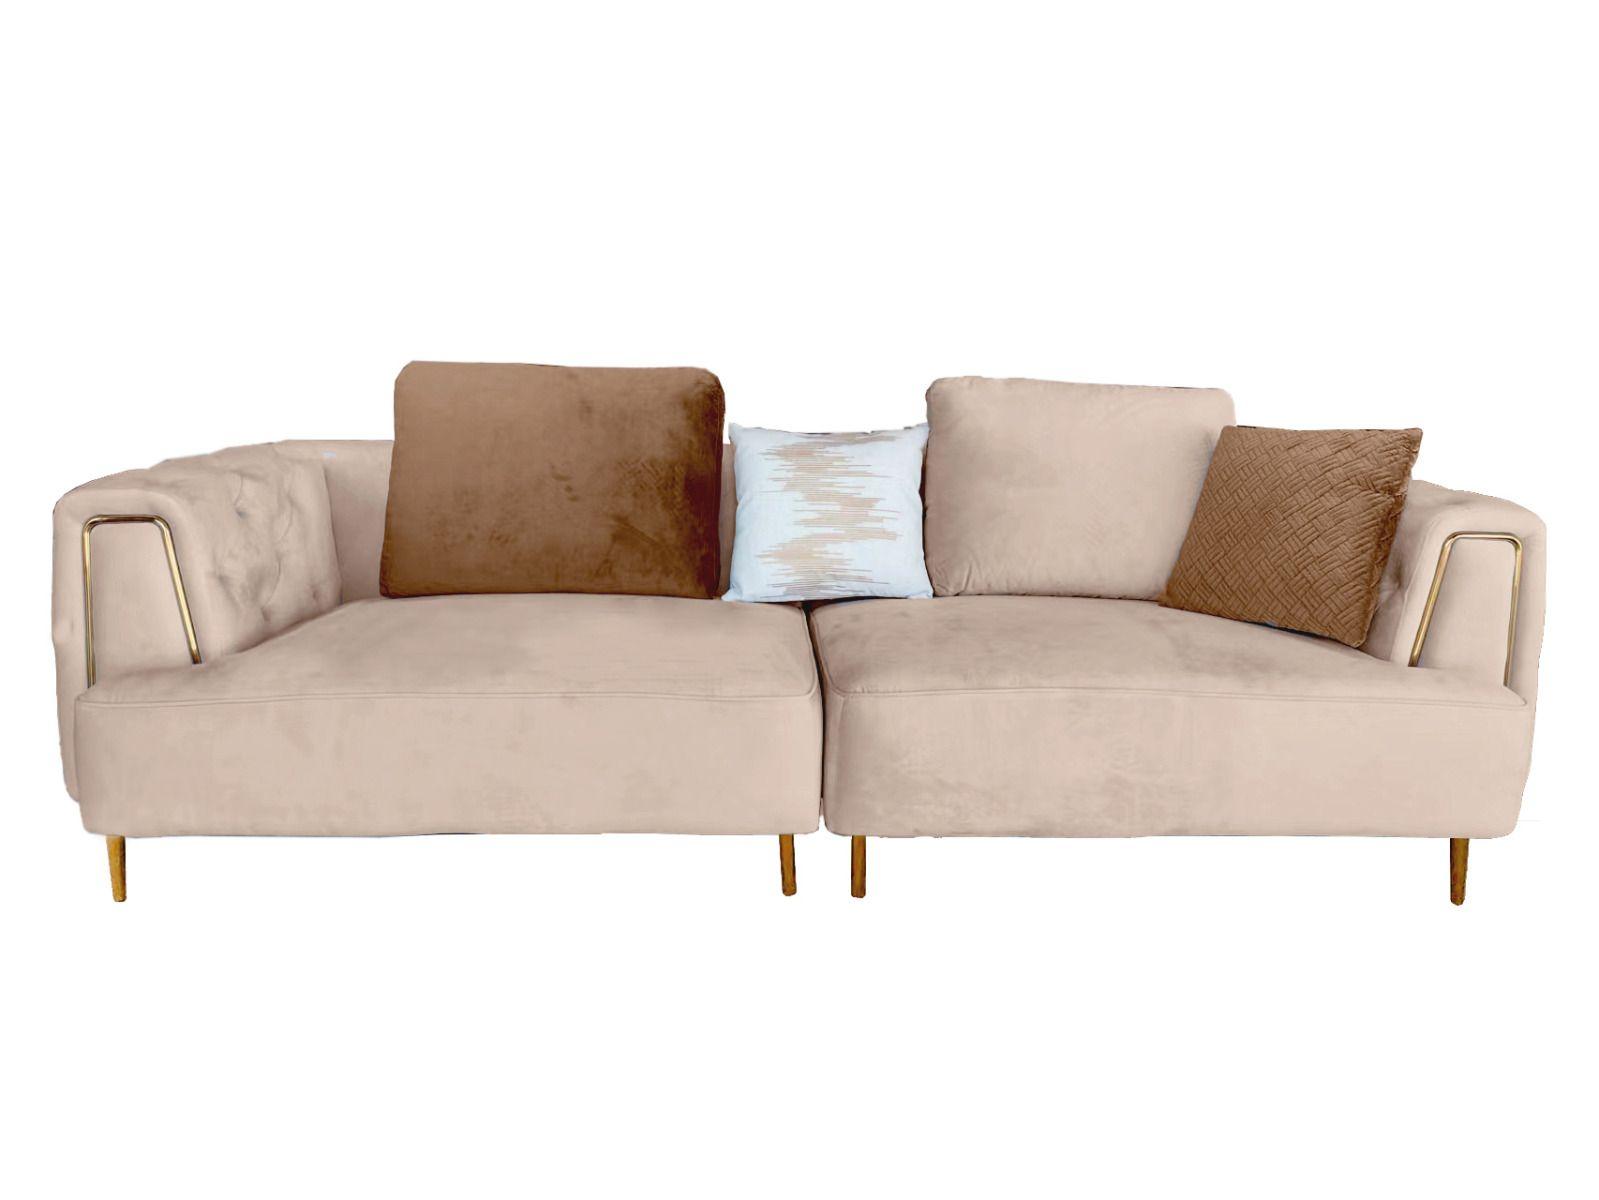 Contemporary Extra Long Sofa AE-D832-CRM-4S AE-D832-CRM-4S in Cream Fabric